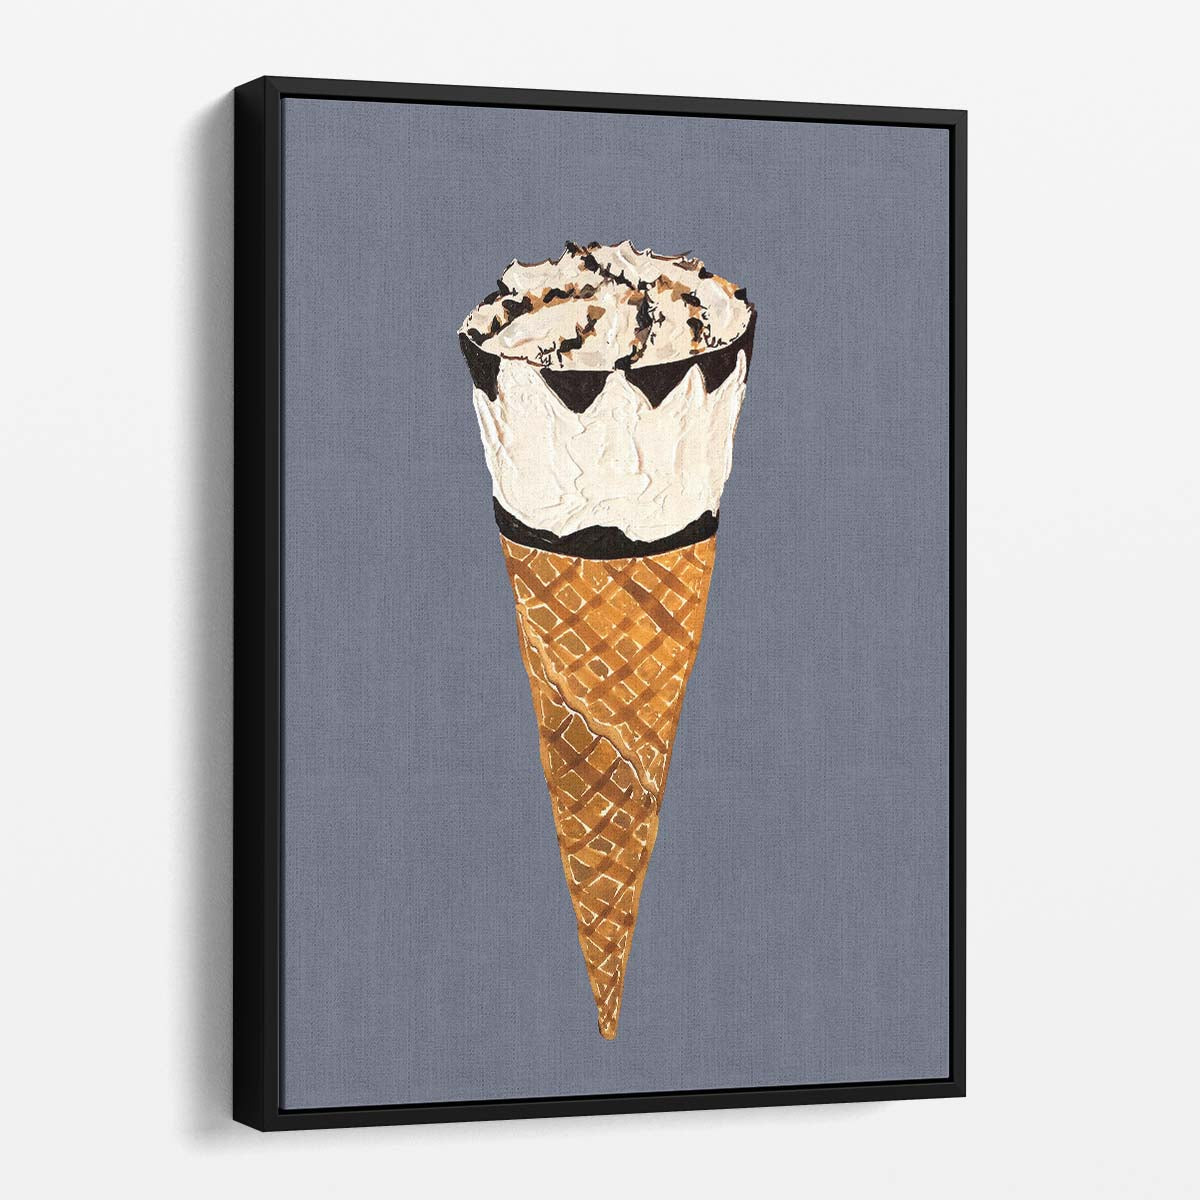 Illustrated Cornetto Ice Cream Dessert Kitchen Wall Art by Luxuriance Designs, made in USA